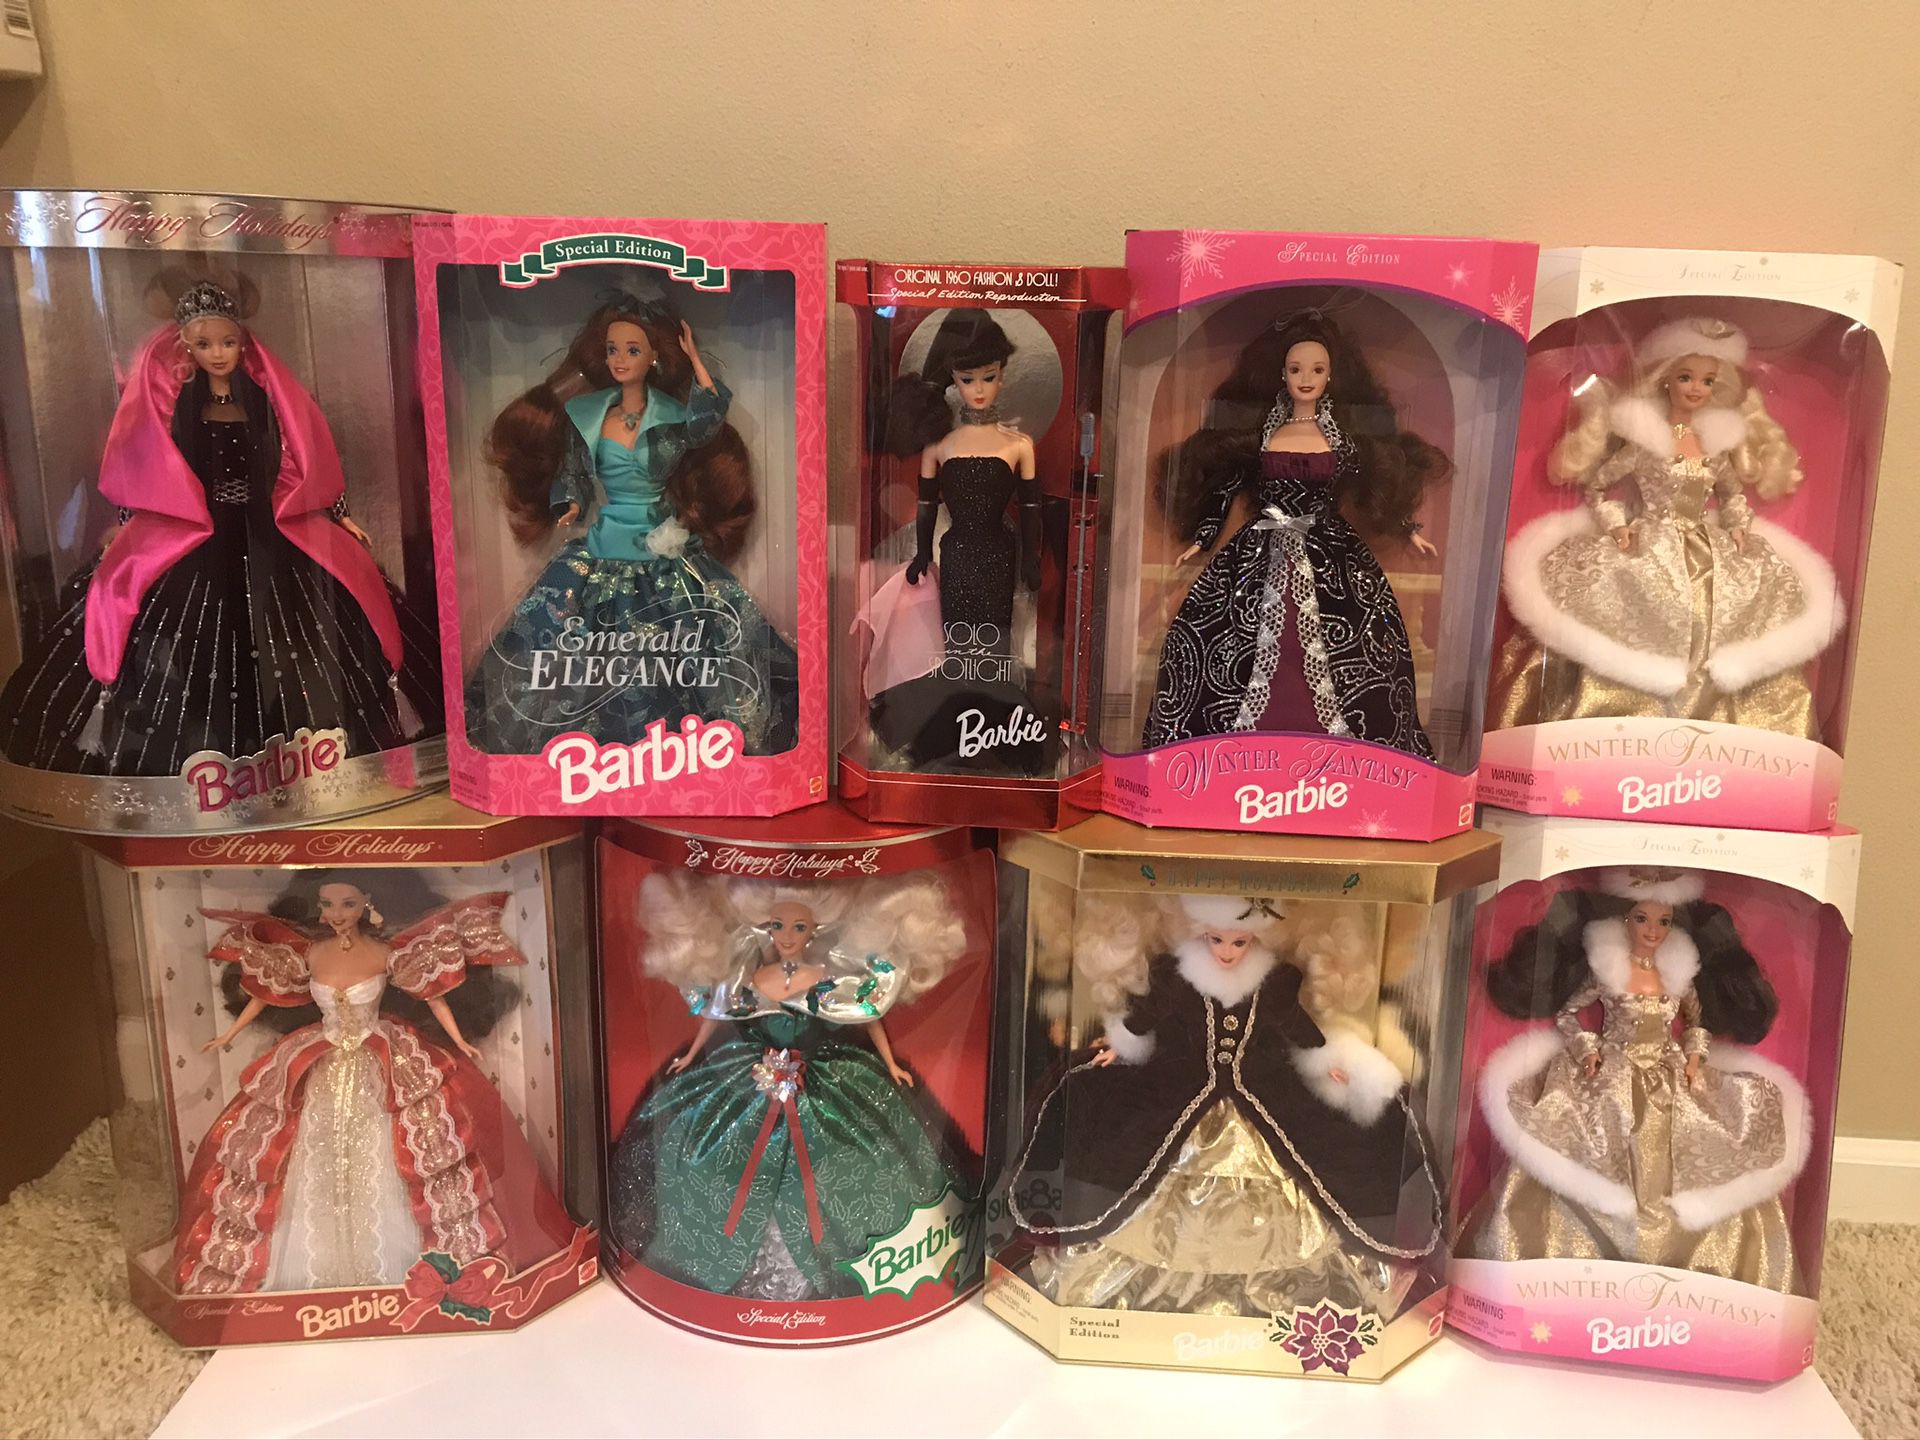 Barbie’s vintage never been opened 1990’s